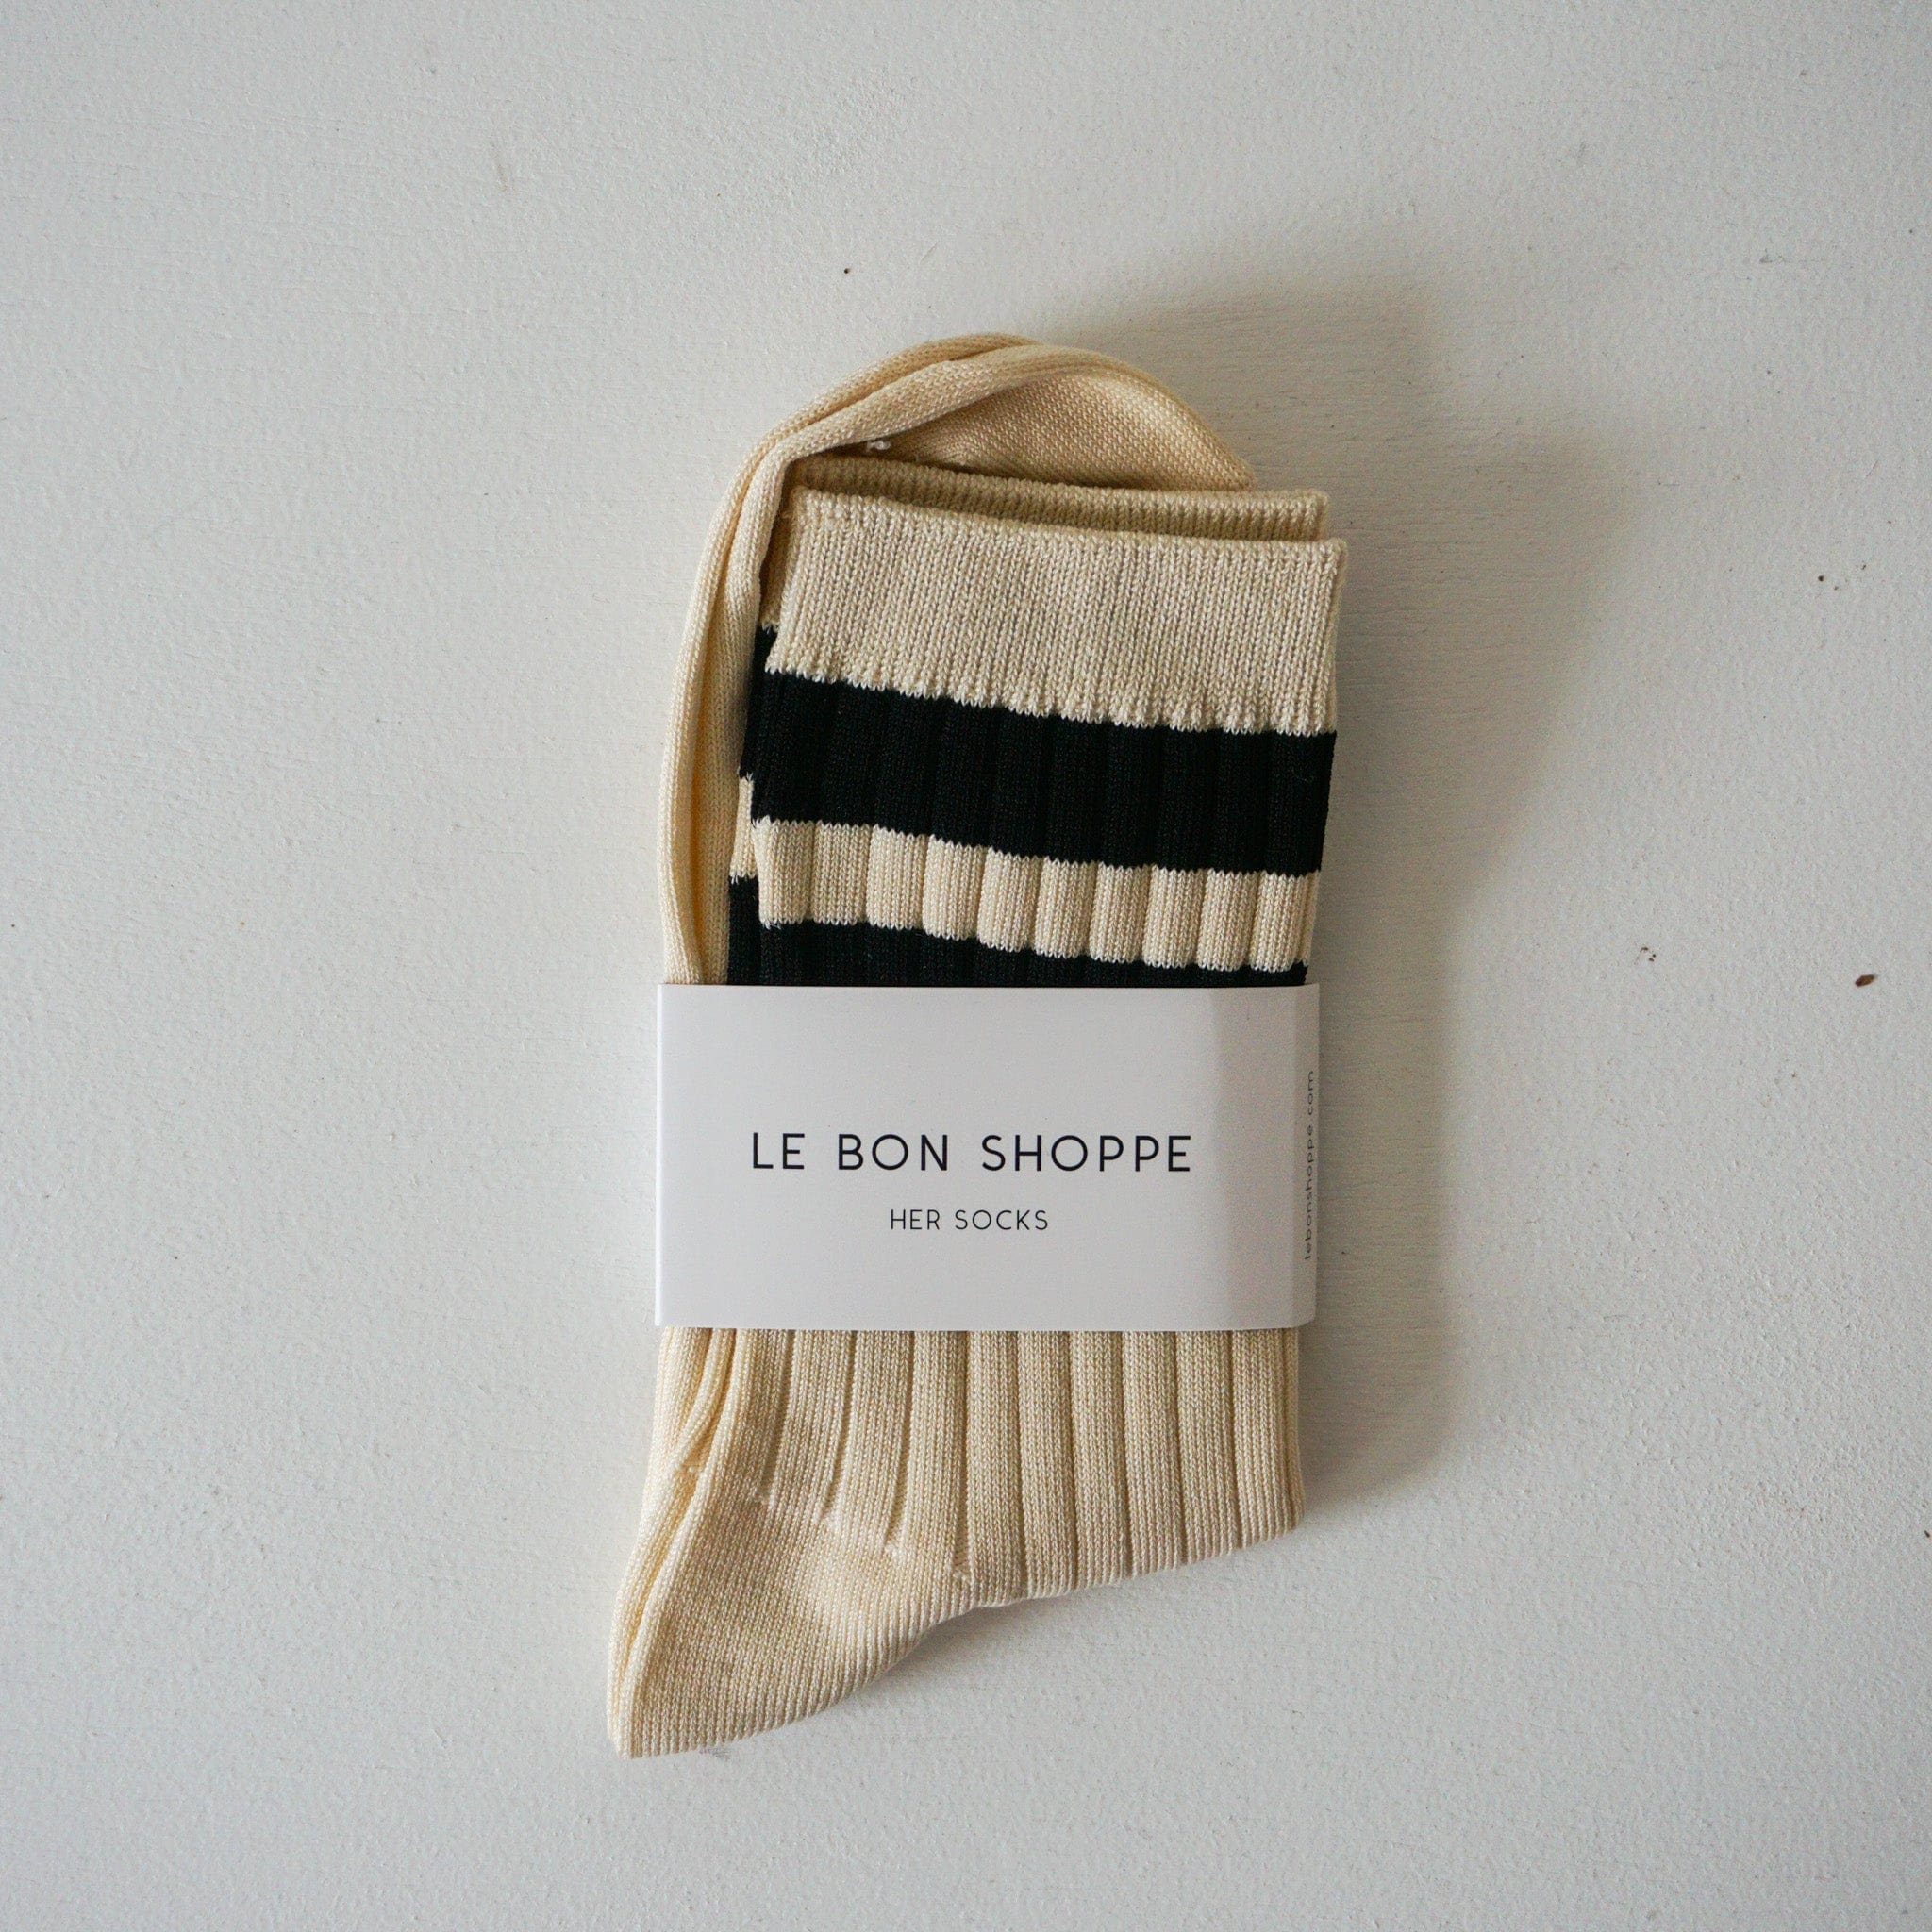 Le Bon Shoppe socks Cream Black Le Bon "Her Socks" Varsity